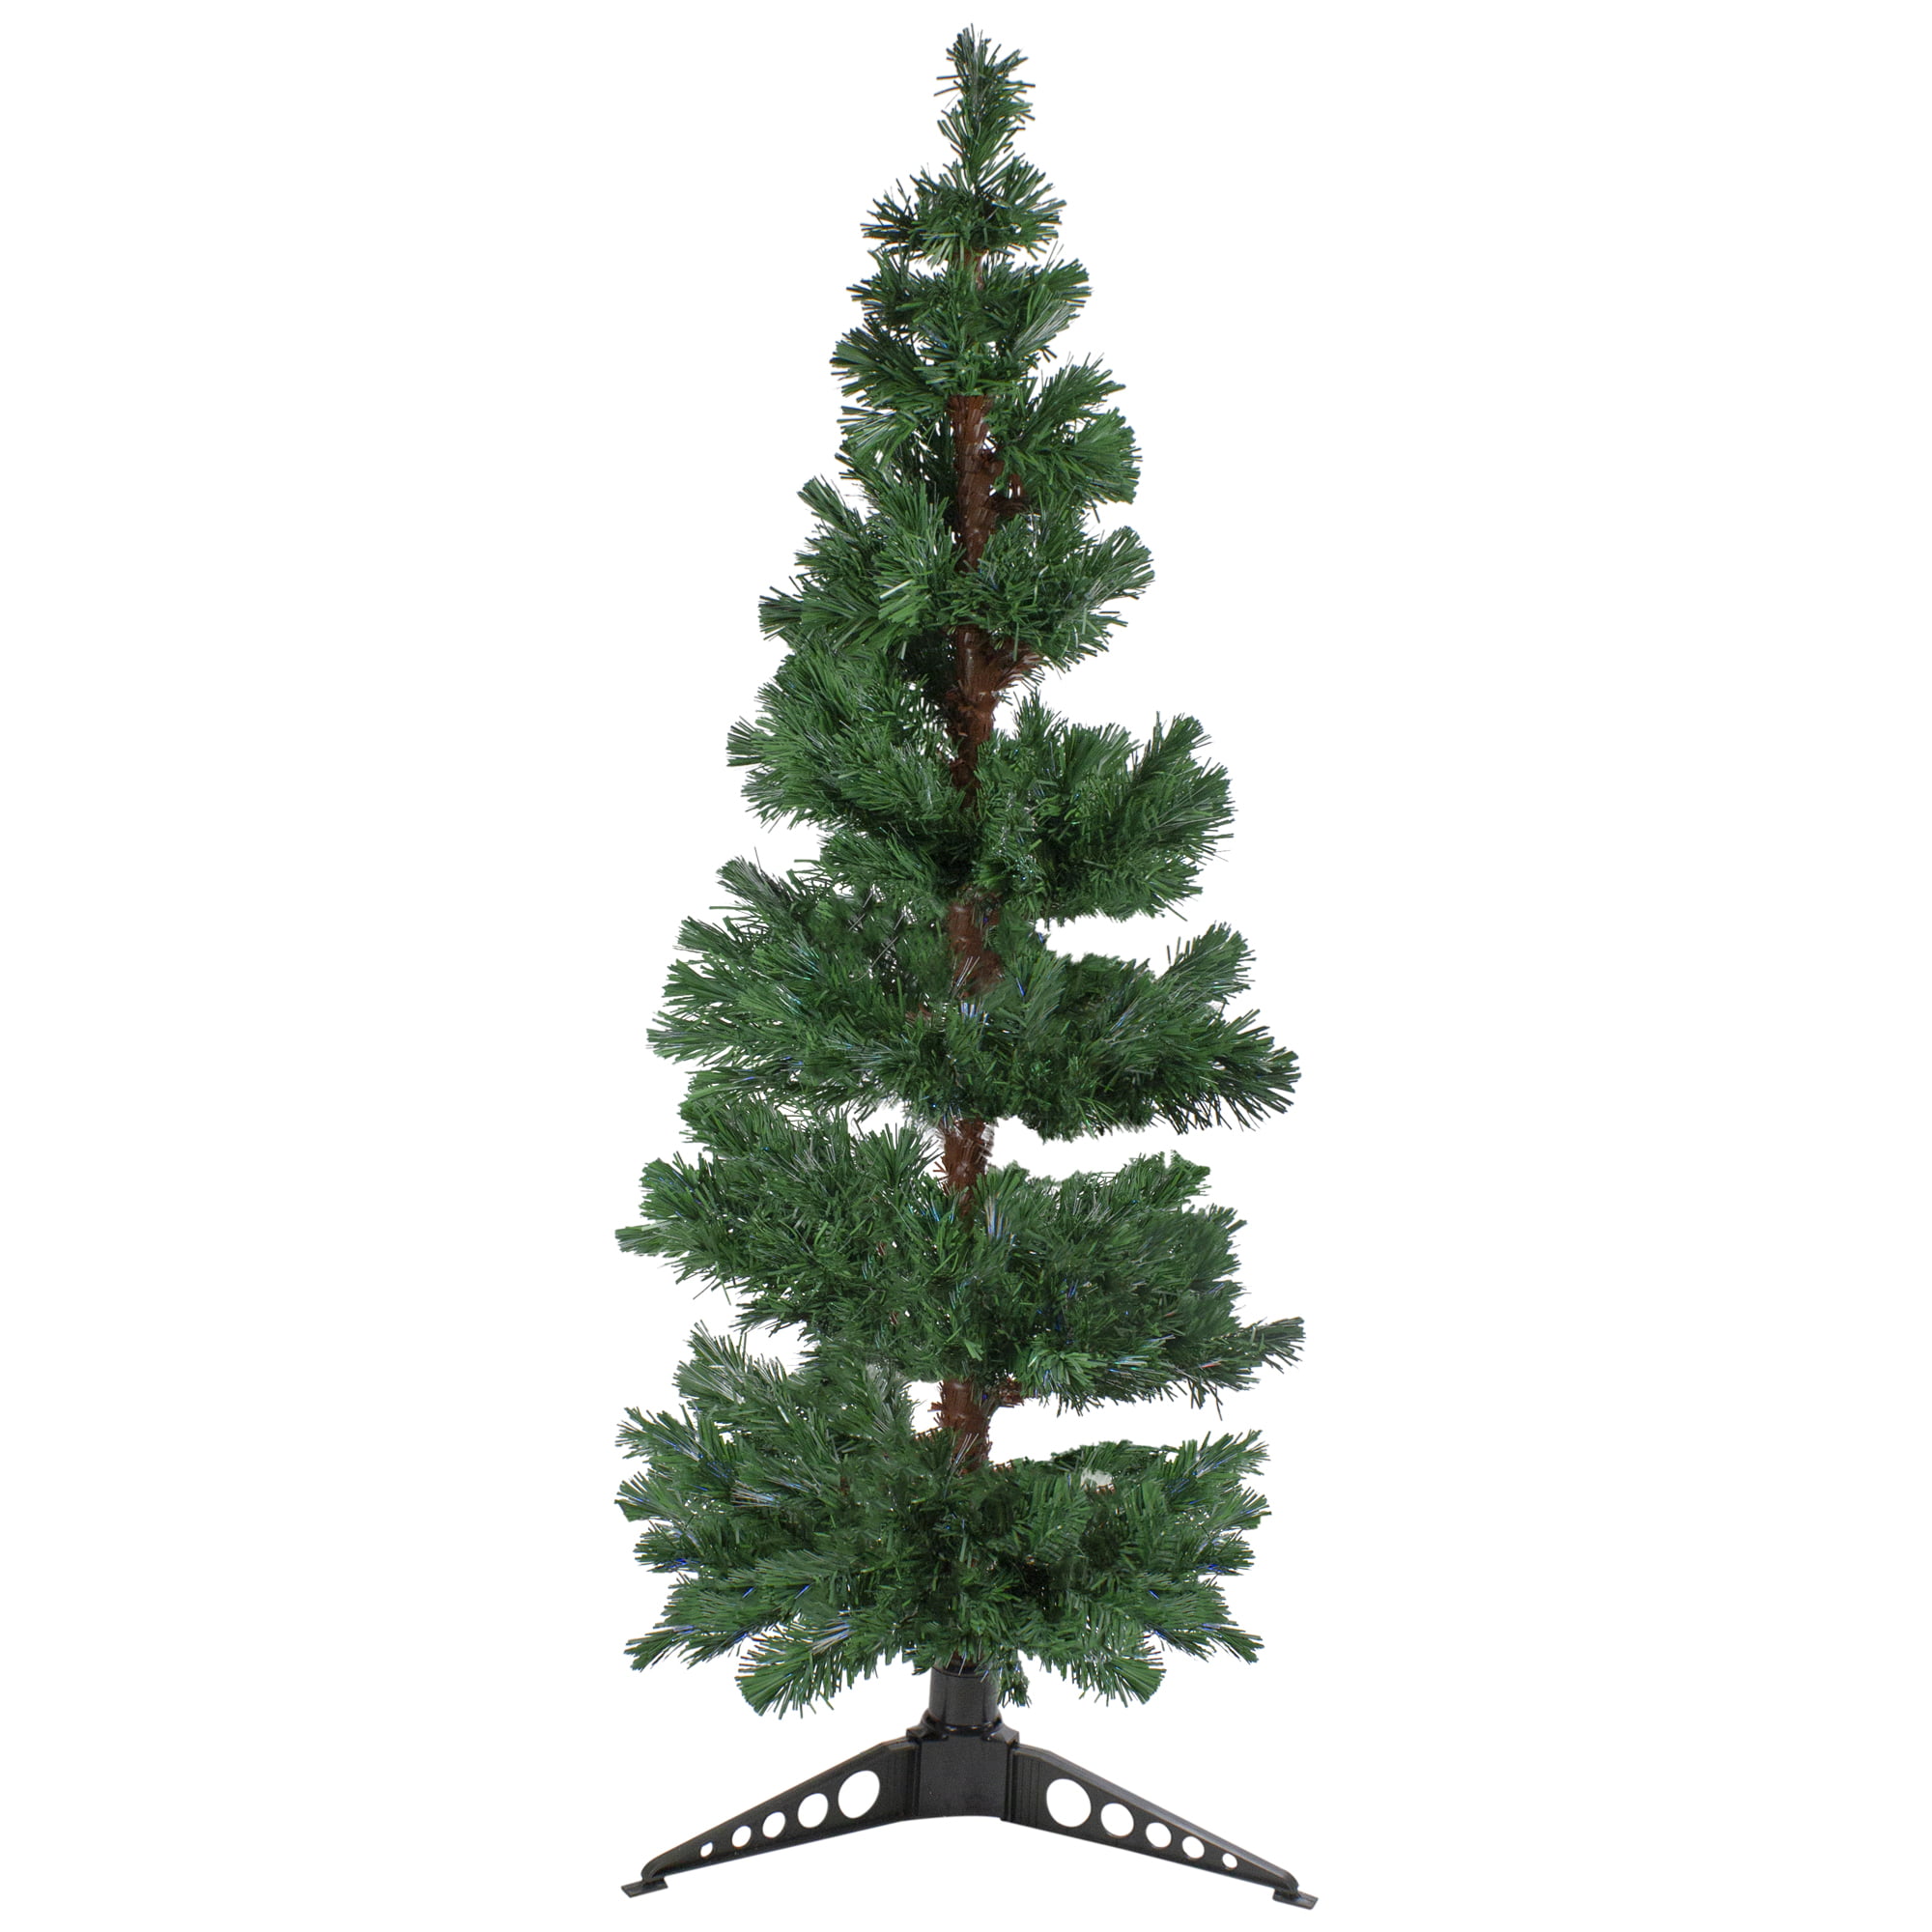 Prelit fiber optic artificial pine spiral Christmas tree Fiber optic Fiber Optic Christmas Tree Color Wheel